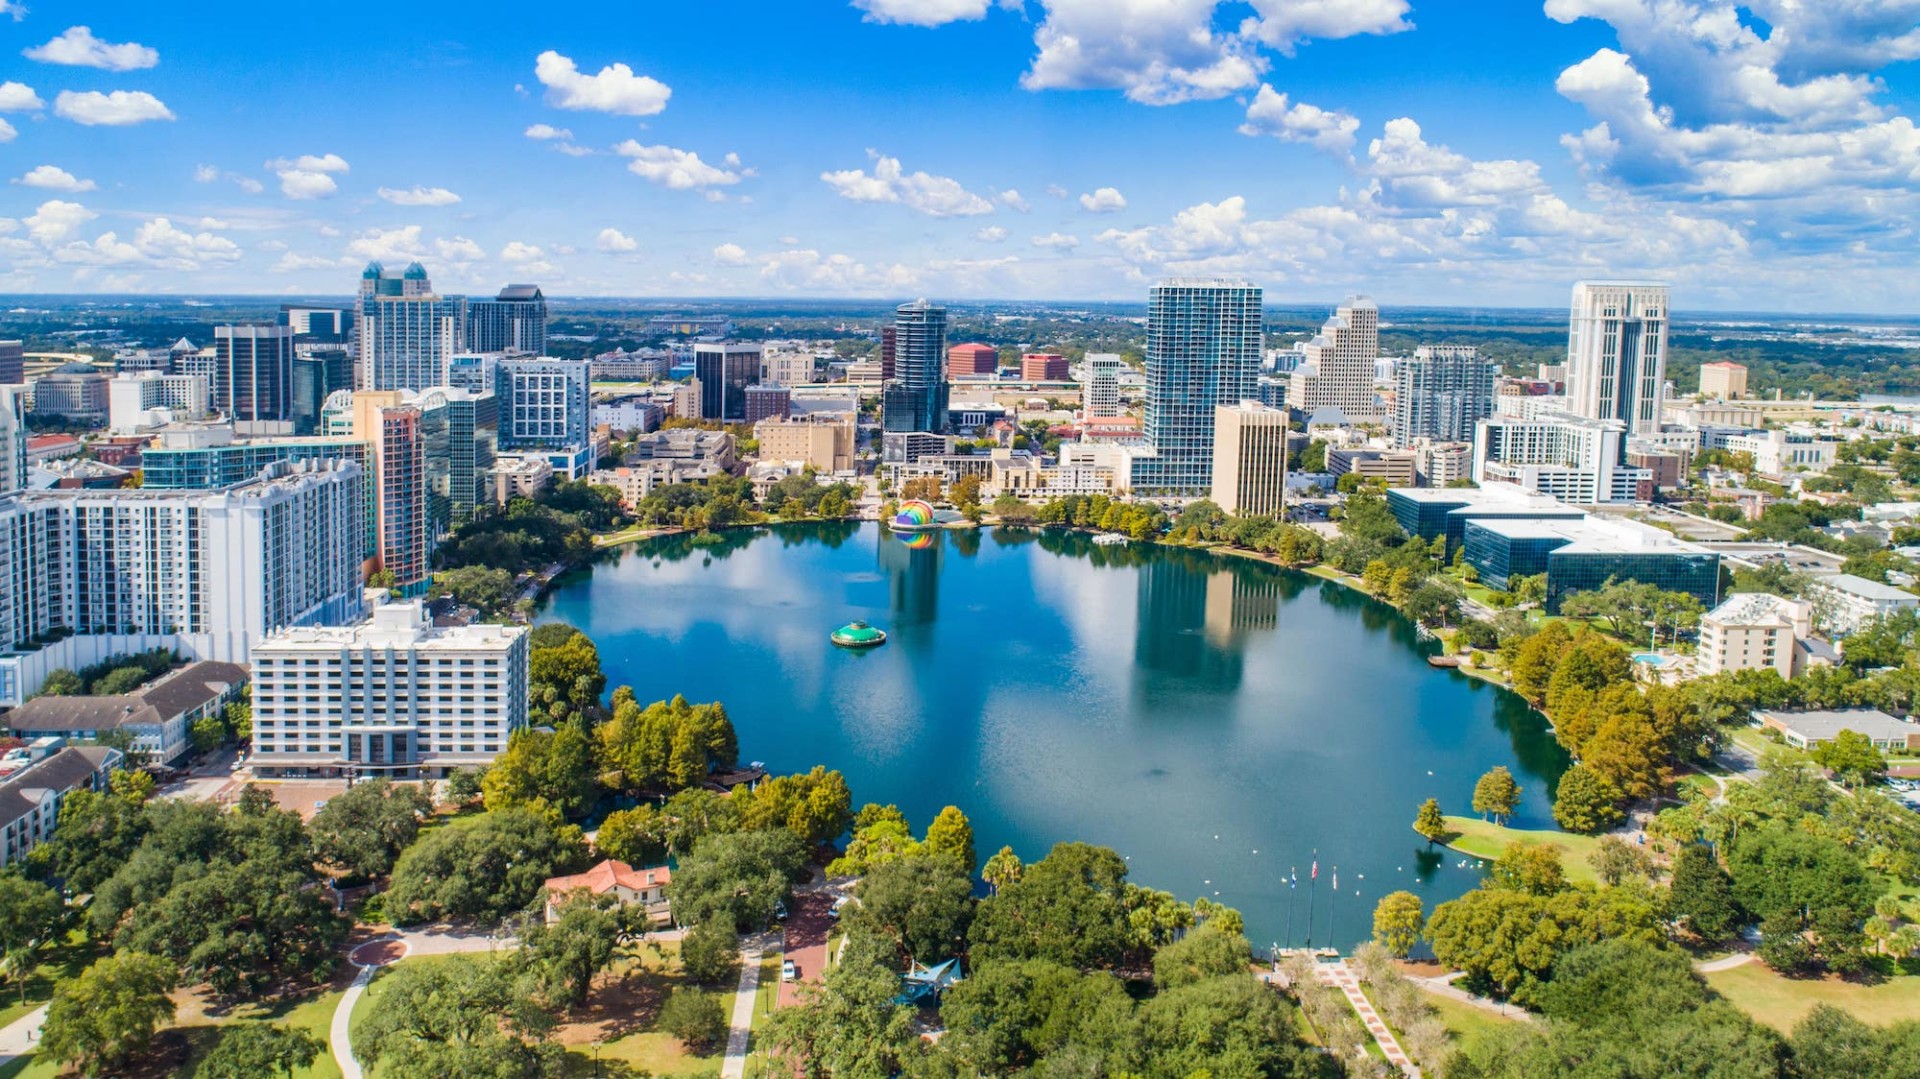 Orlando Florida Mynd Rental property management company